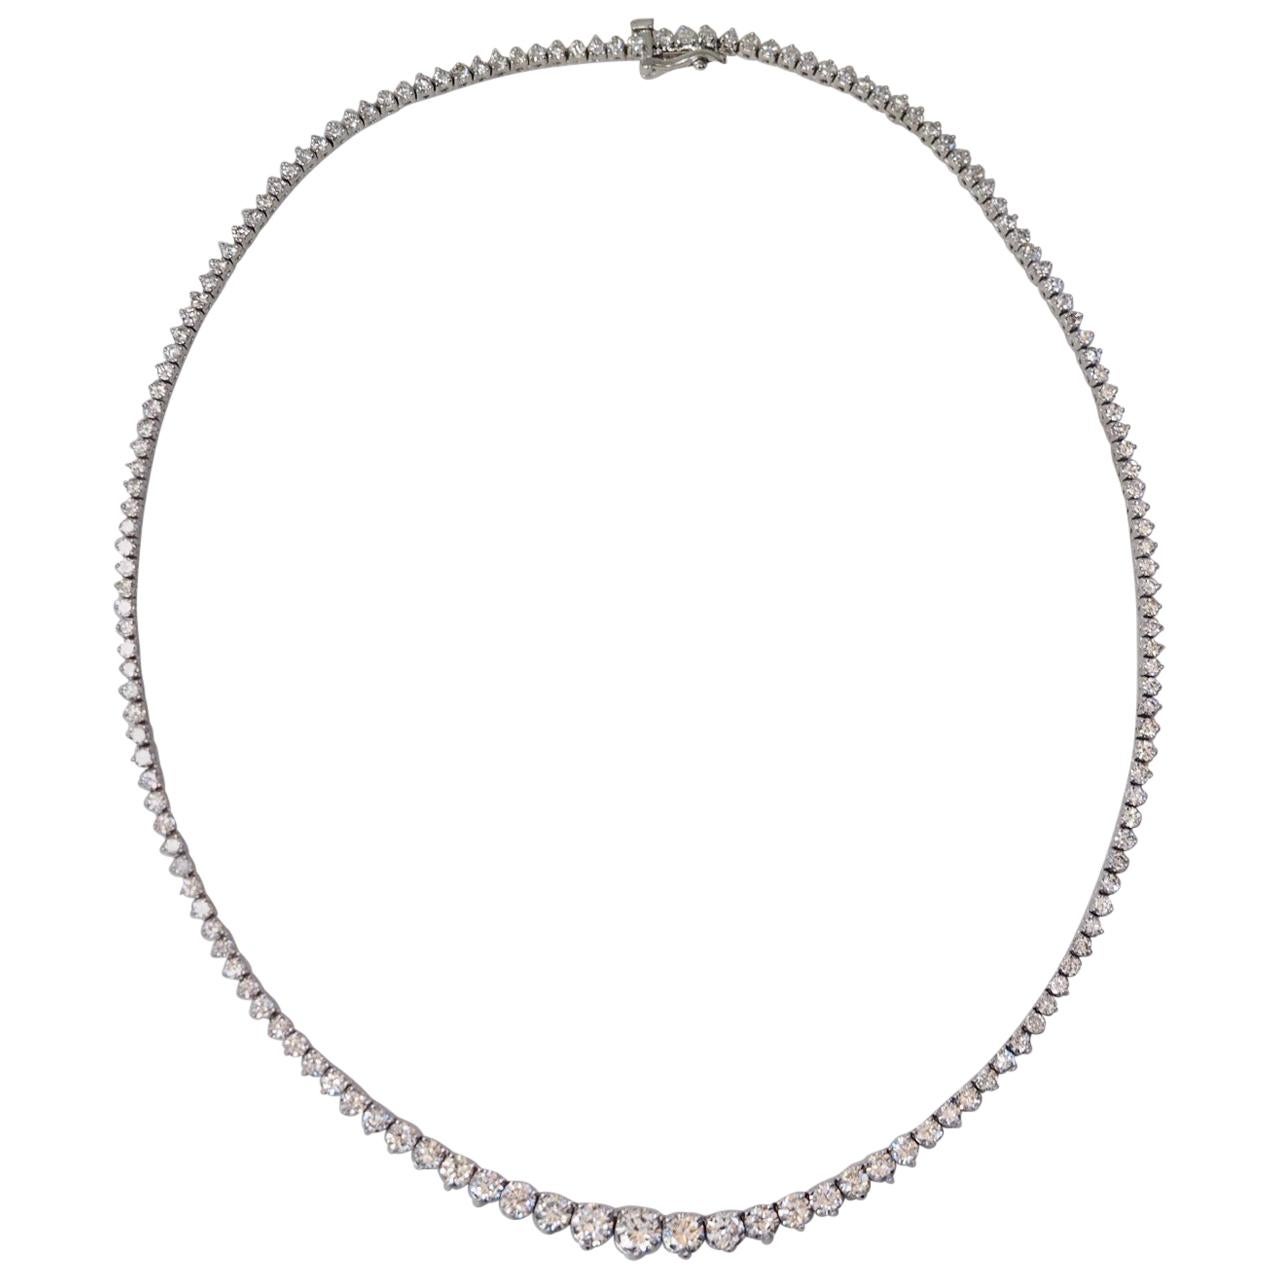 10 Carat Diamond Tennis Necklace